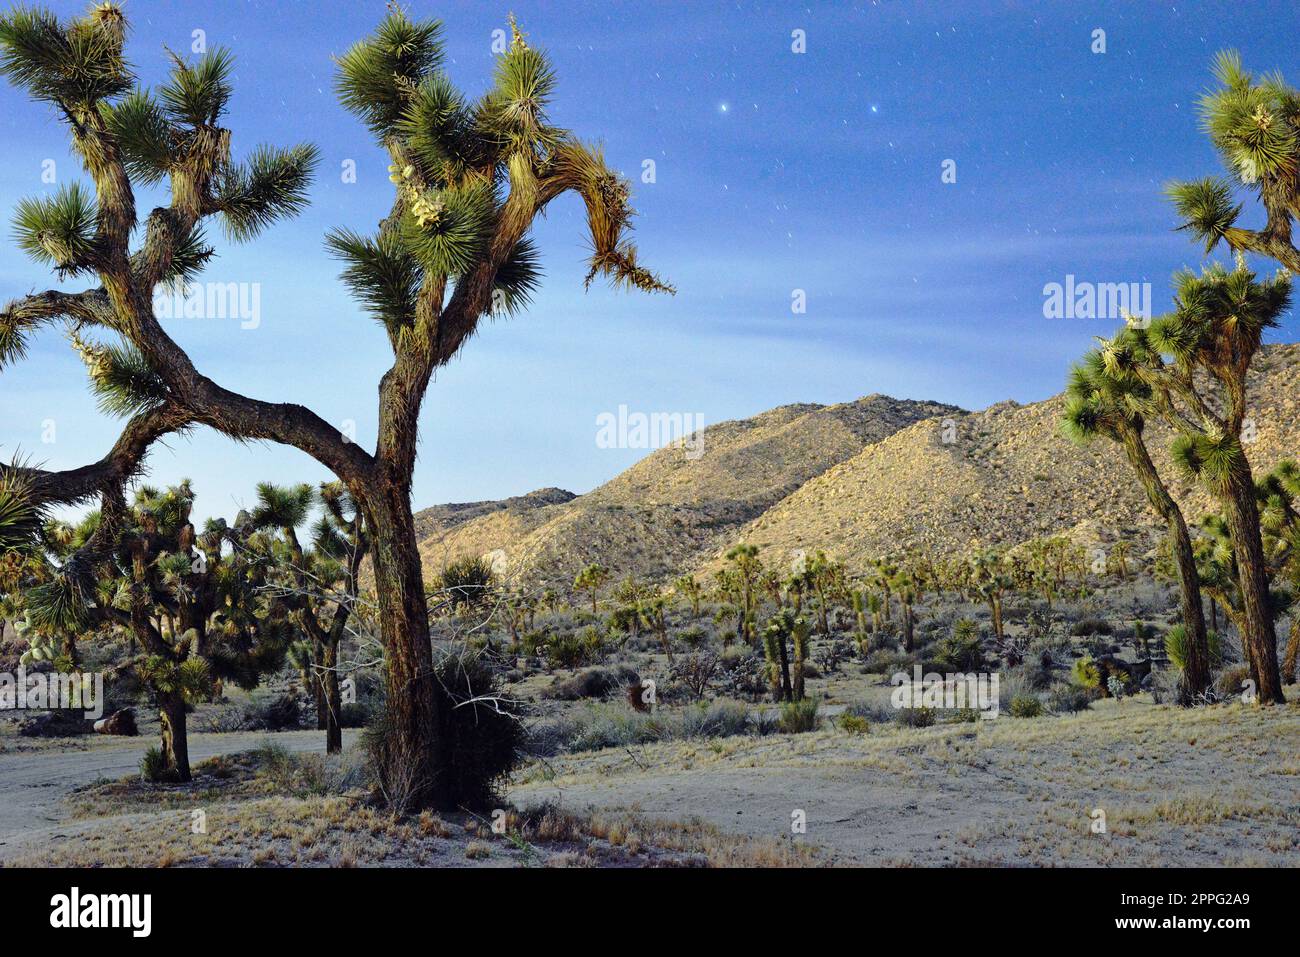 Joshua Trees under a starry night sky in the California desert Stock Photo